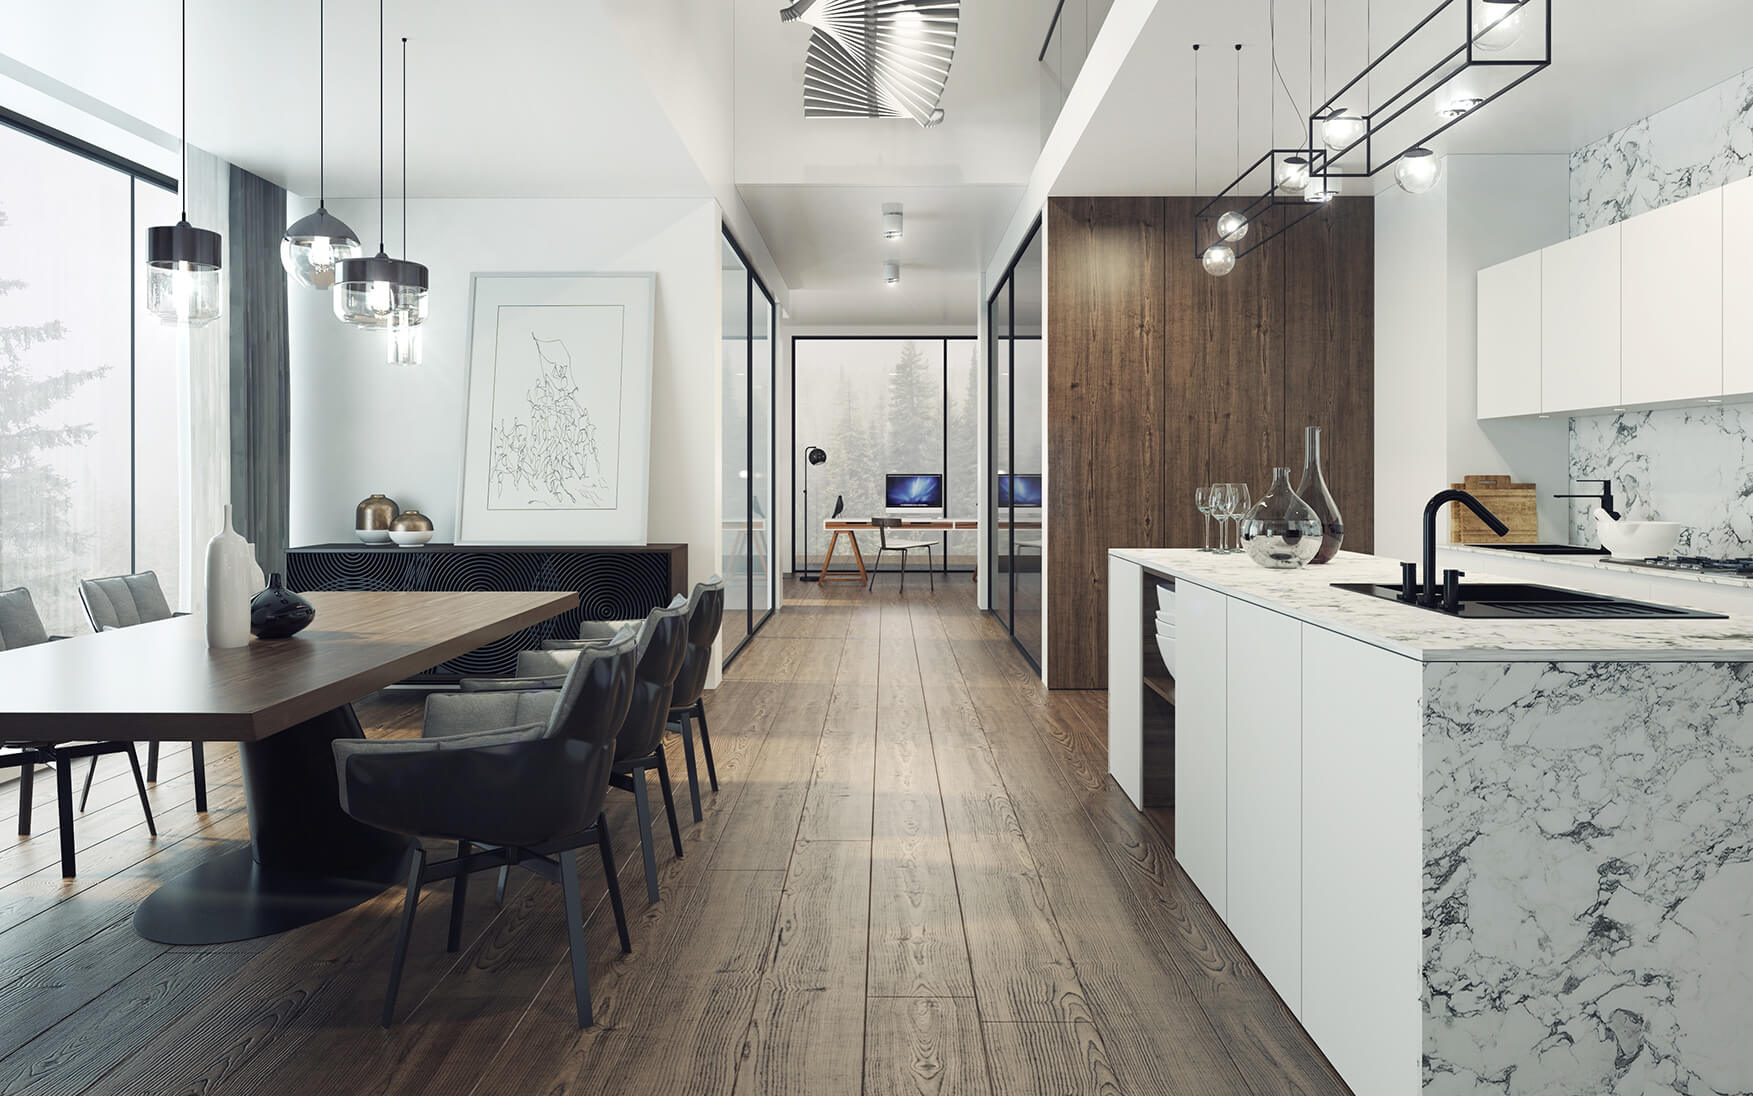 Modern office kitchen with granite countertops and matching backsplash